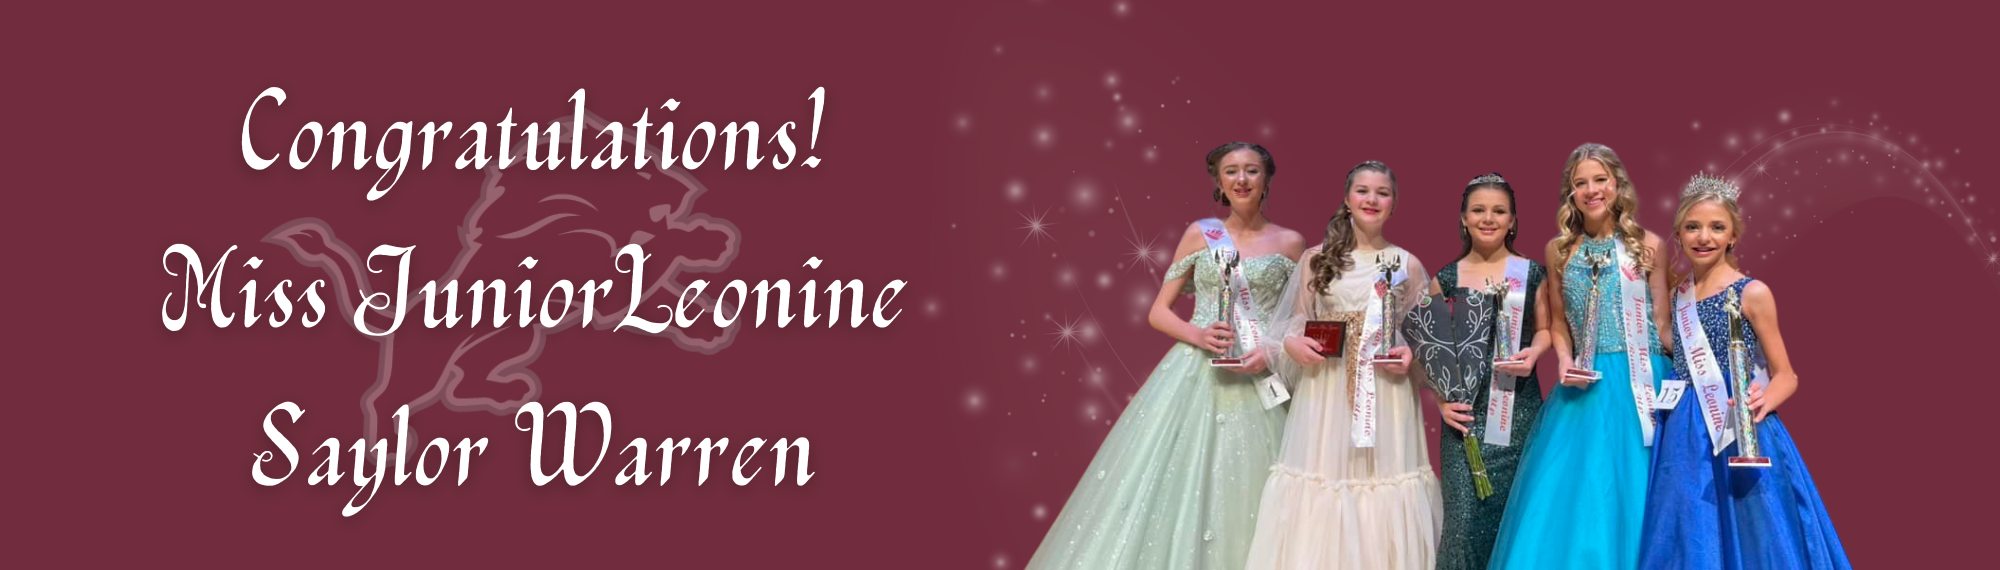 congratulations miss junior leonine saylor warren